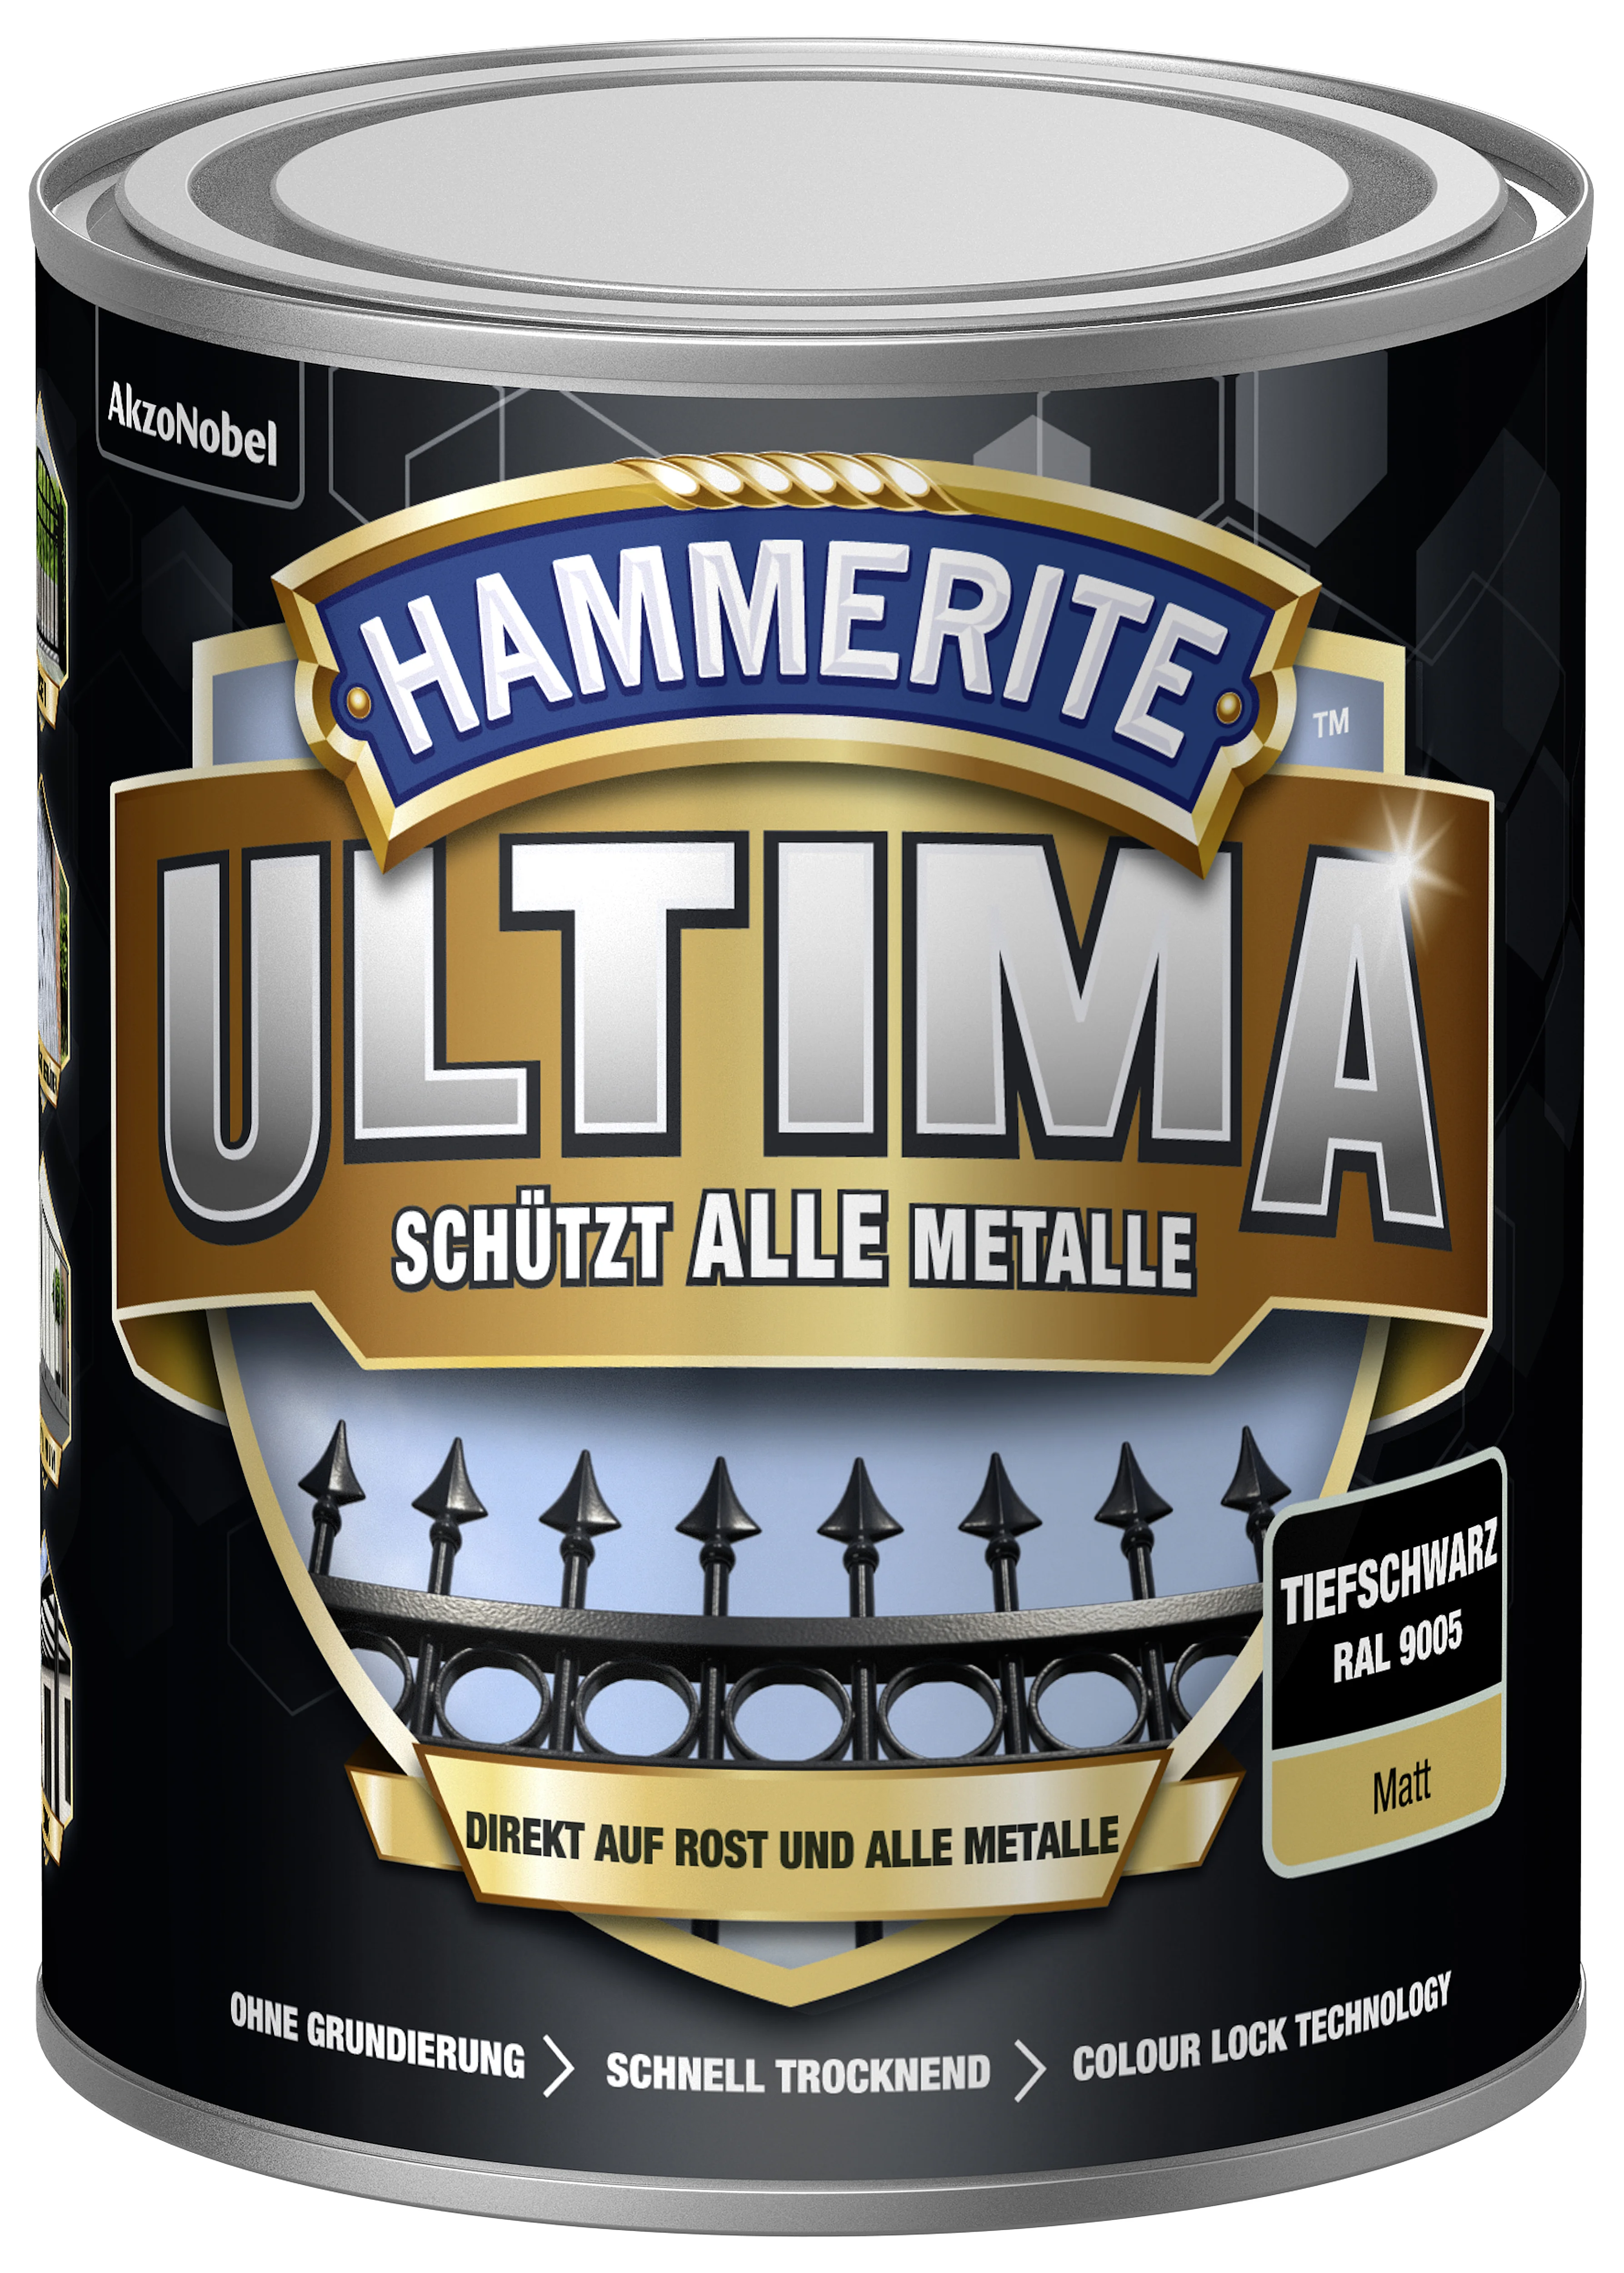 Hammerite Ultima Metallschutzlack Tiefschwarz matt 750 ml